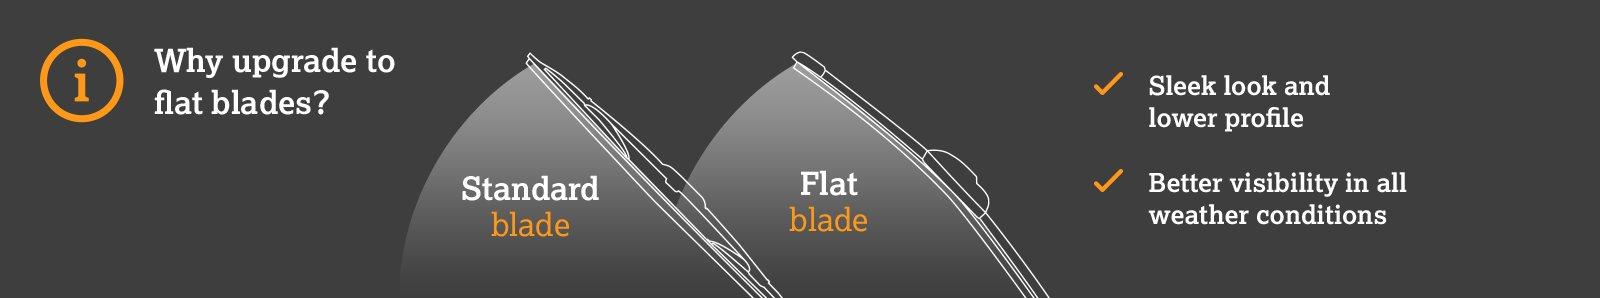 FlatBlades